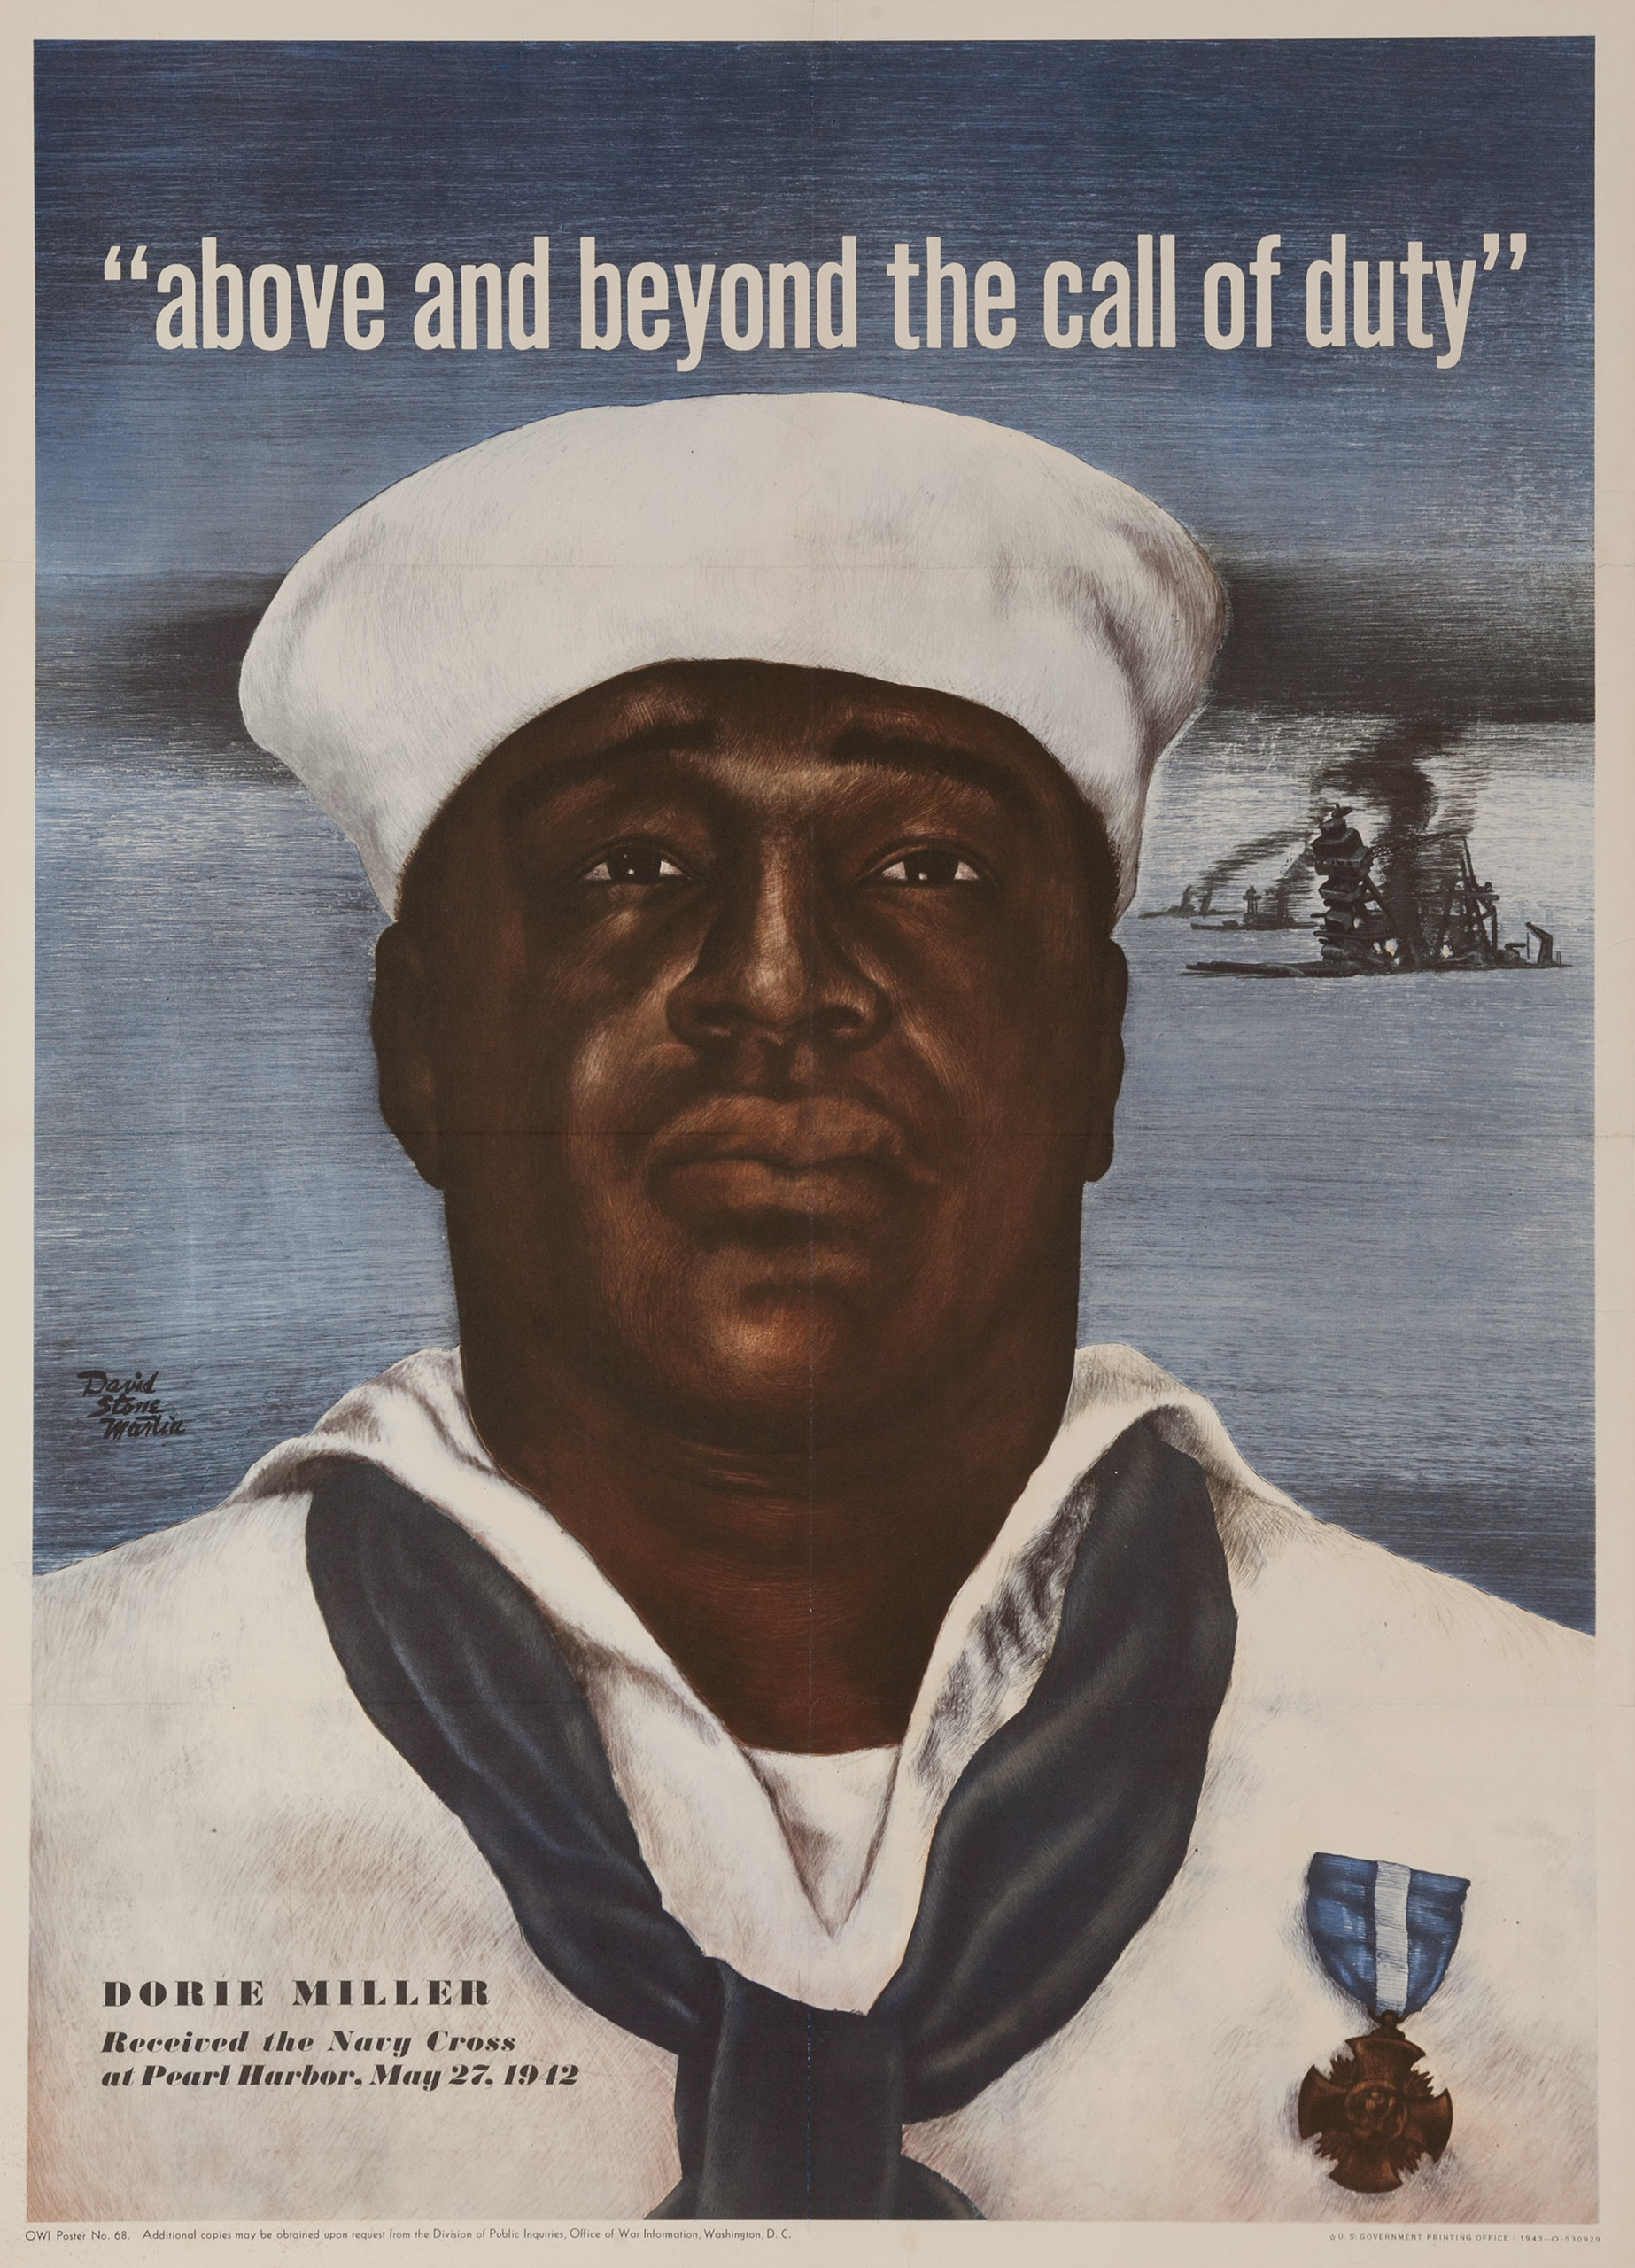 1943 US Navy poster featuring Dorie Miller.